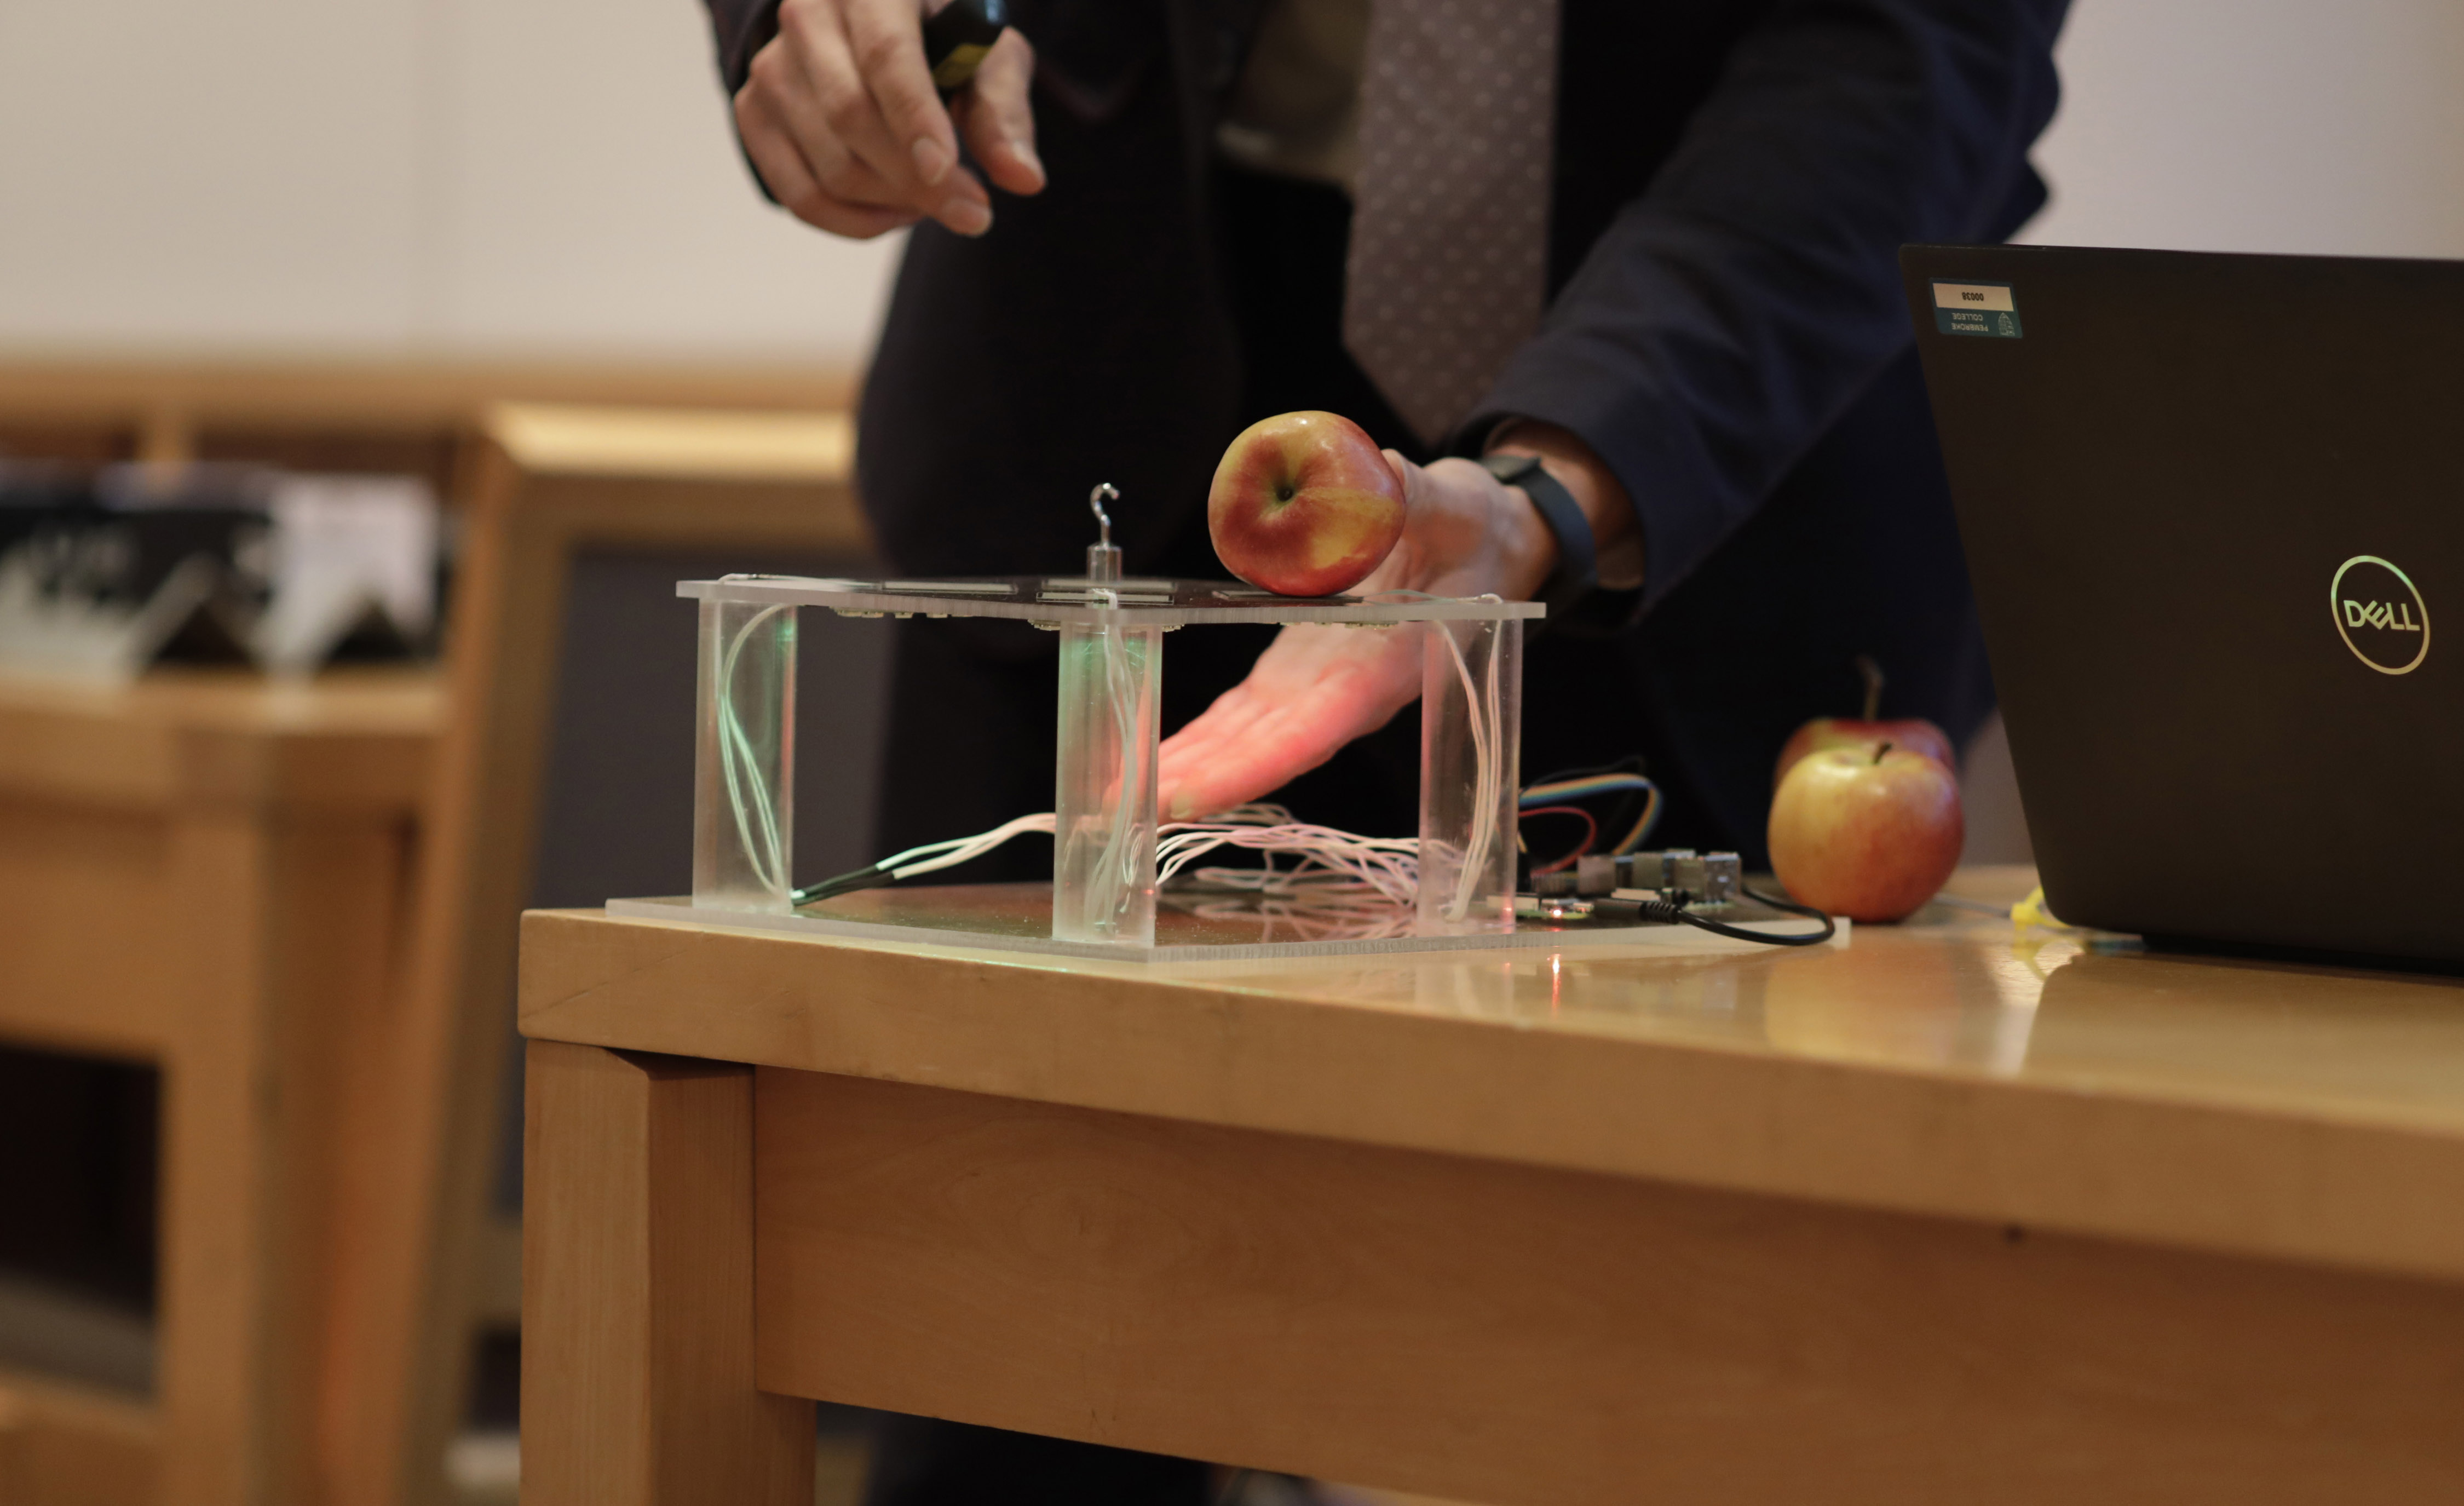 Ivan Grega demonstrates their prototype piezoresistive weight sensors